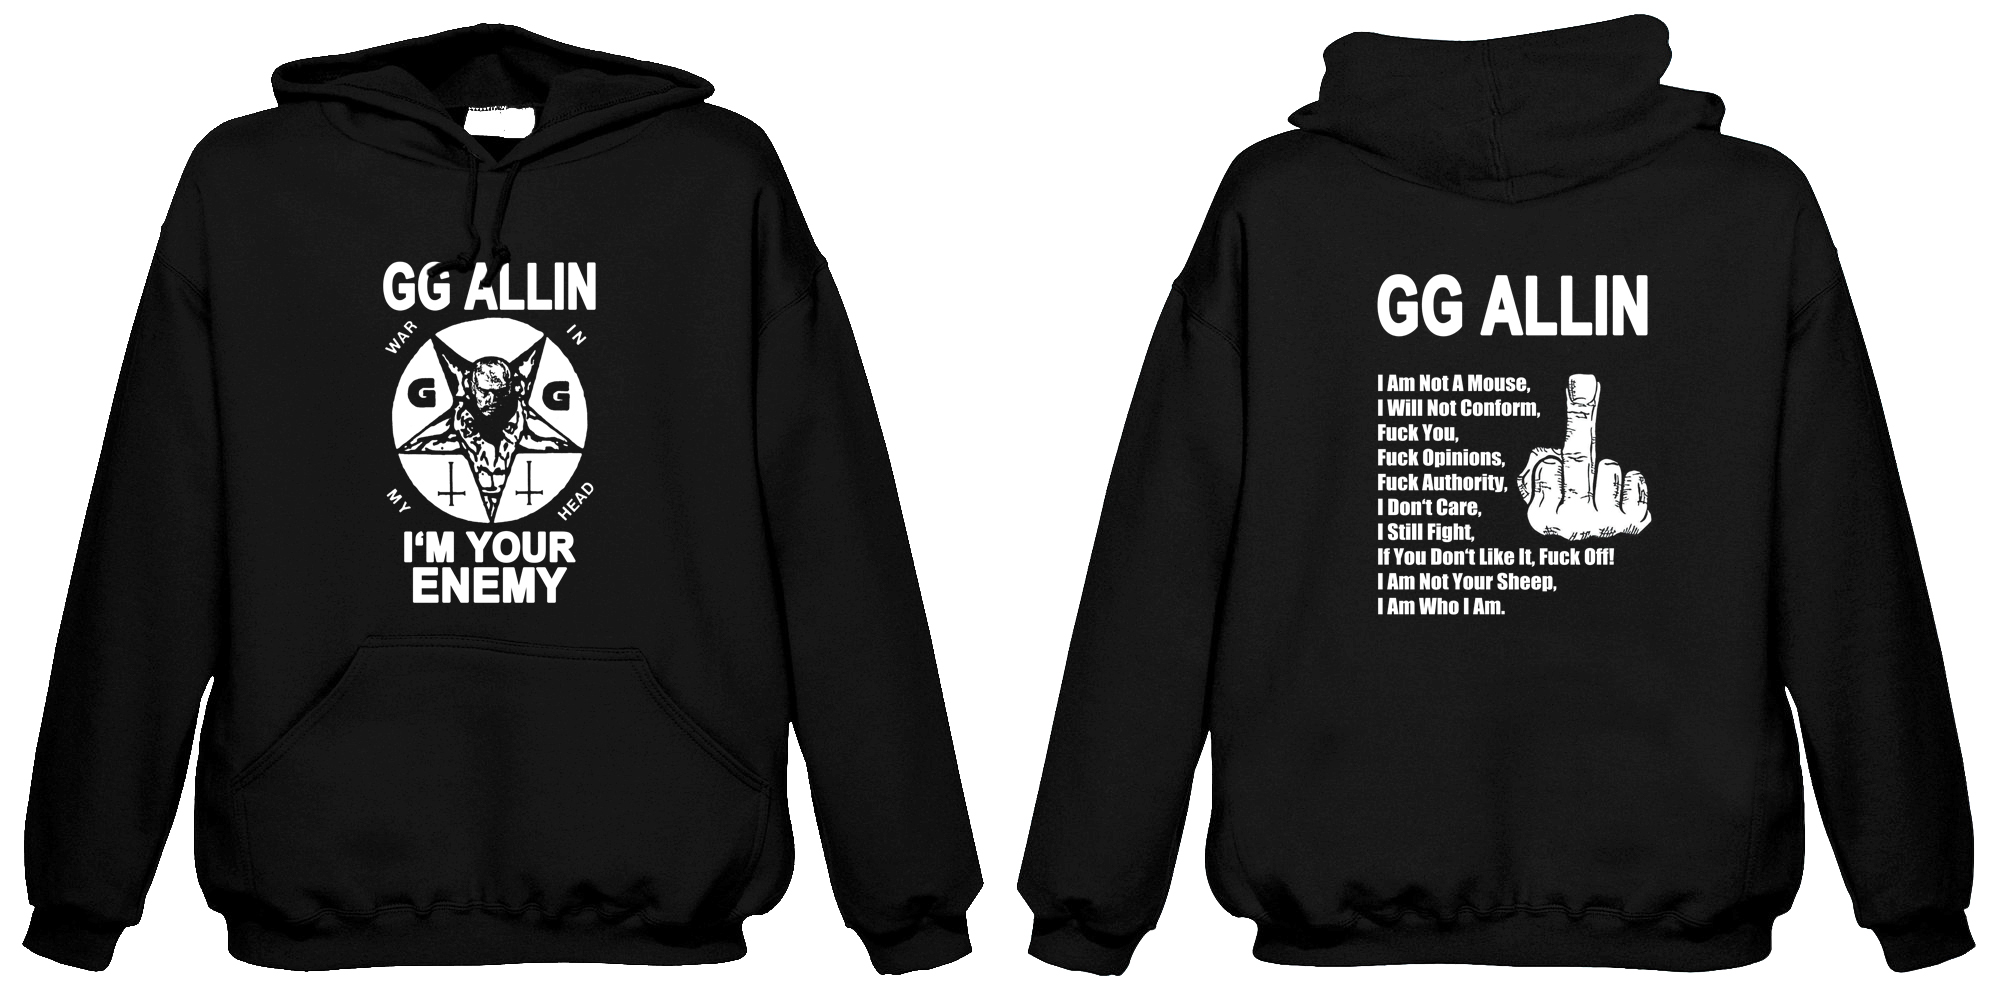 GG Allin - I'm Your Enemy  (Hooded Sweatshirt)